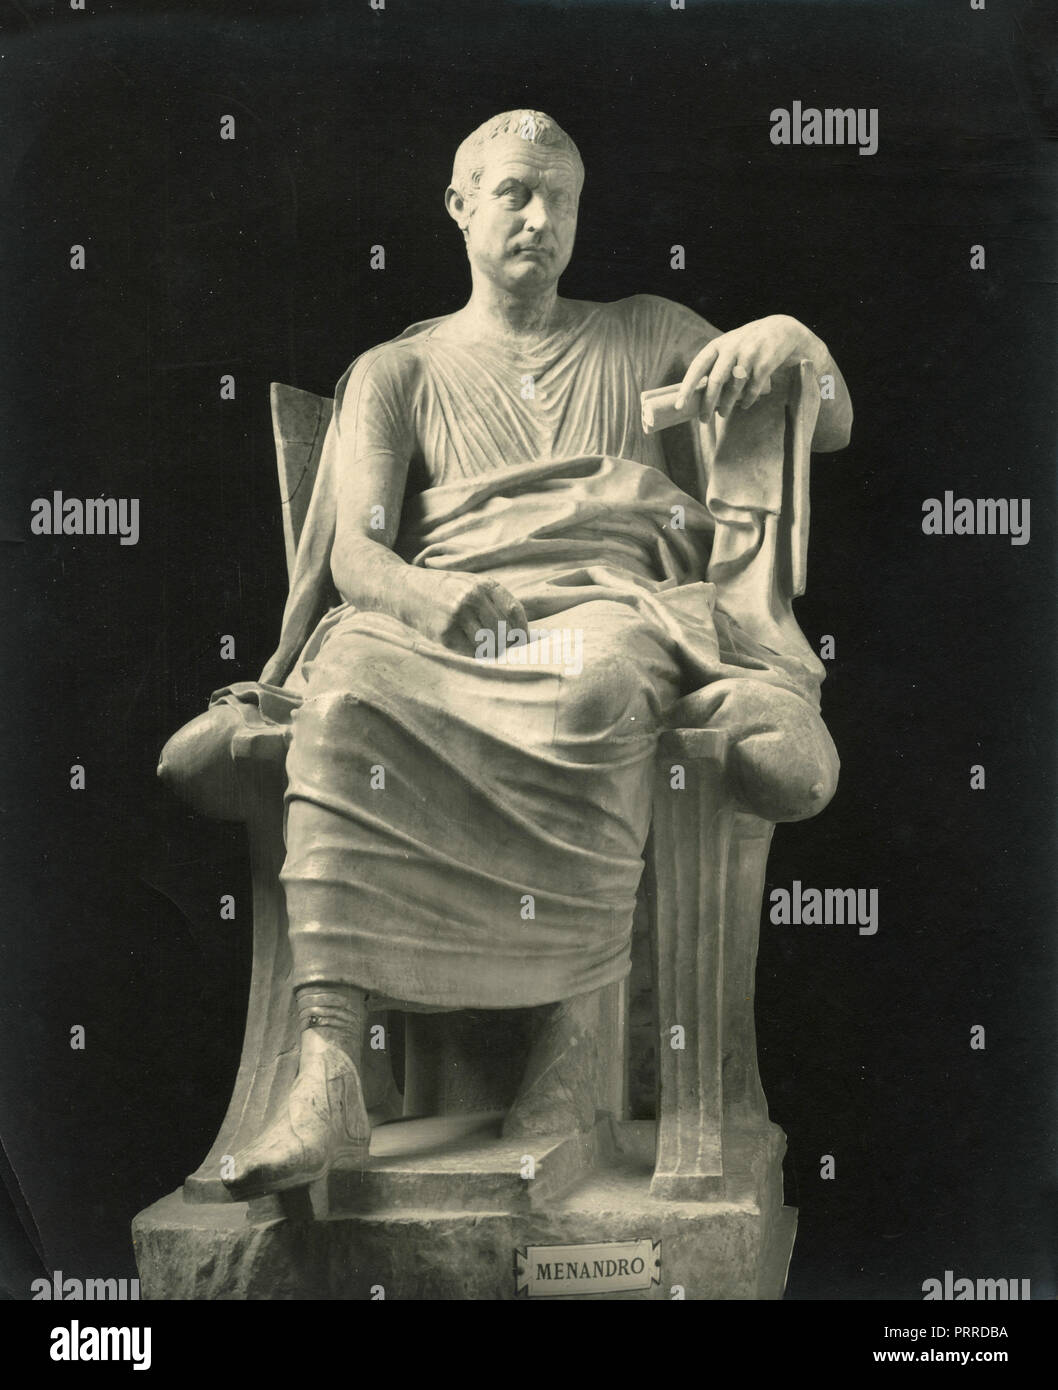 Menander, statua in marmo, 1910s Foto Stock